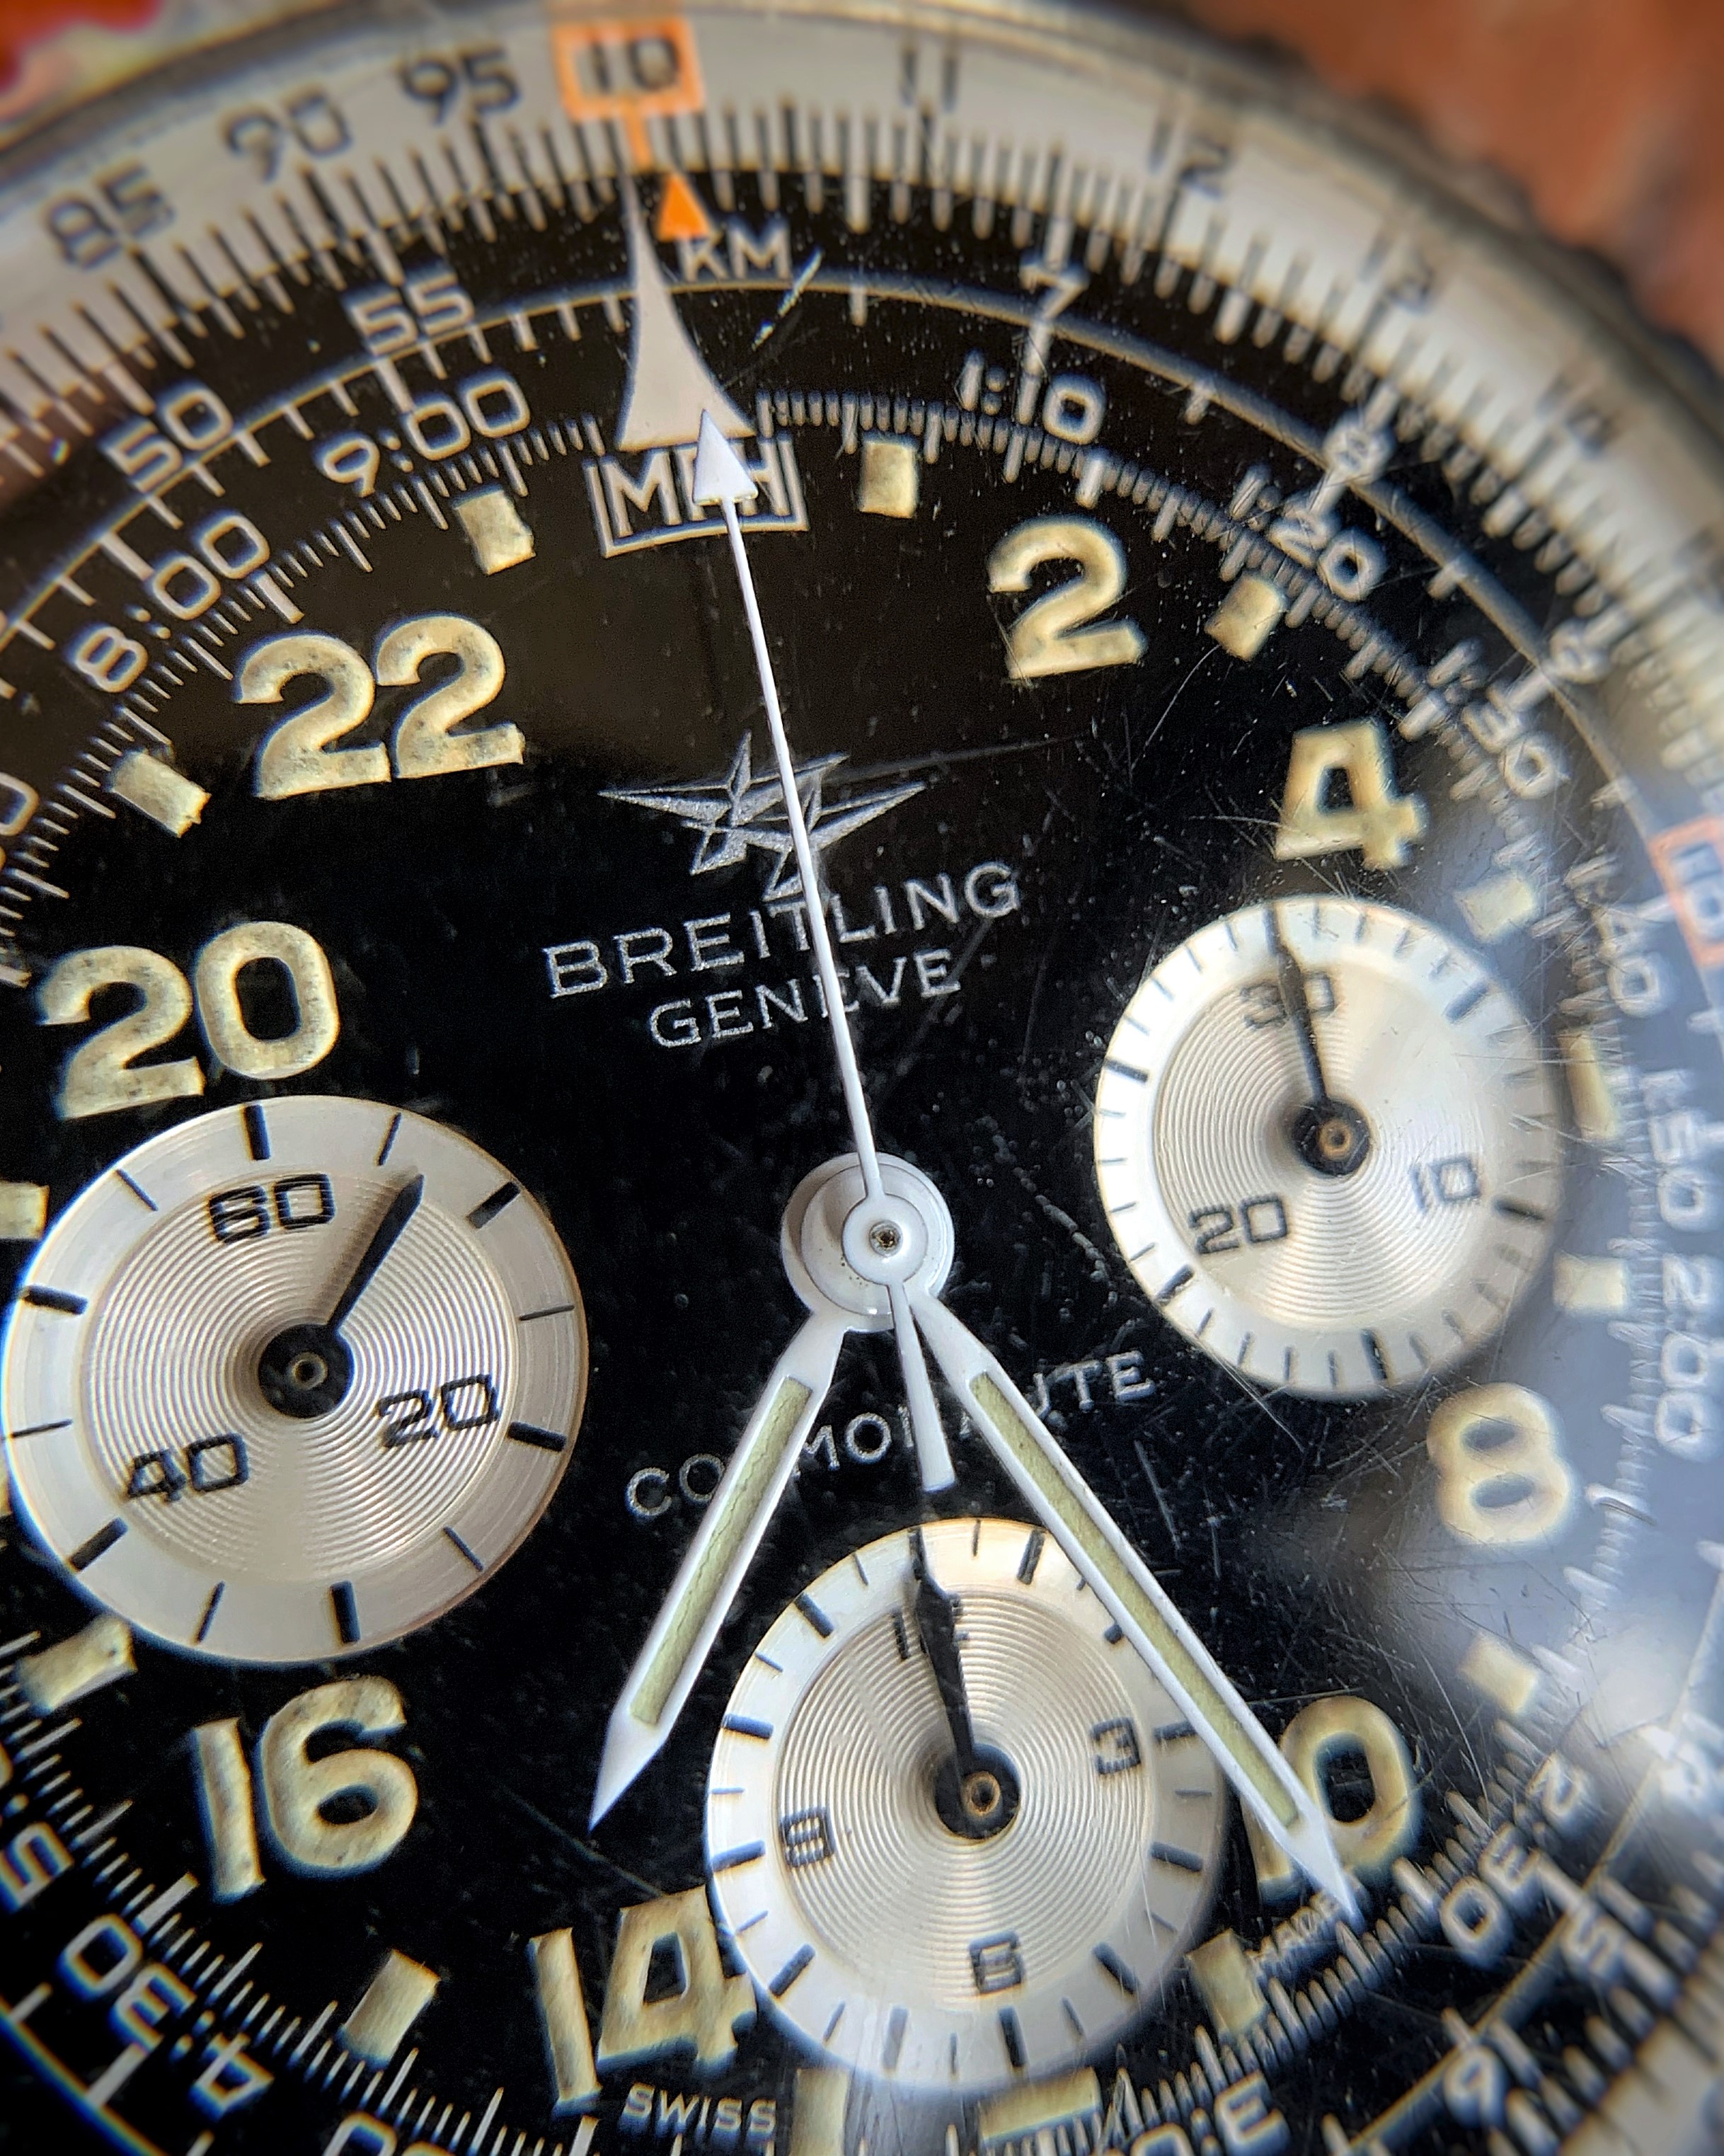 Breitling Cosmonaute dial macro